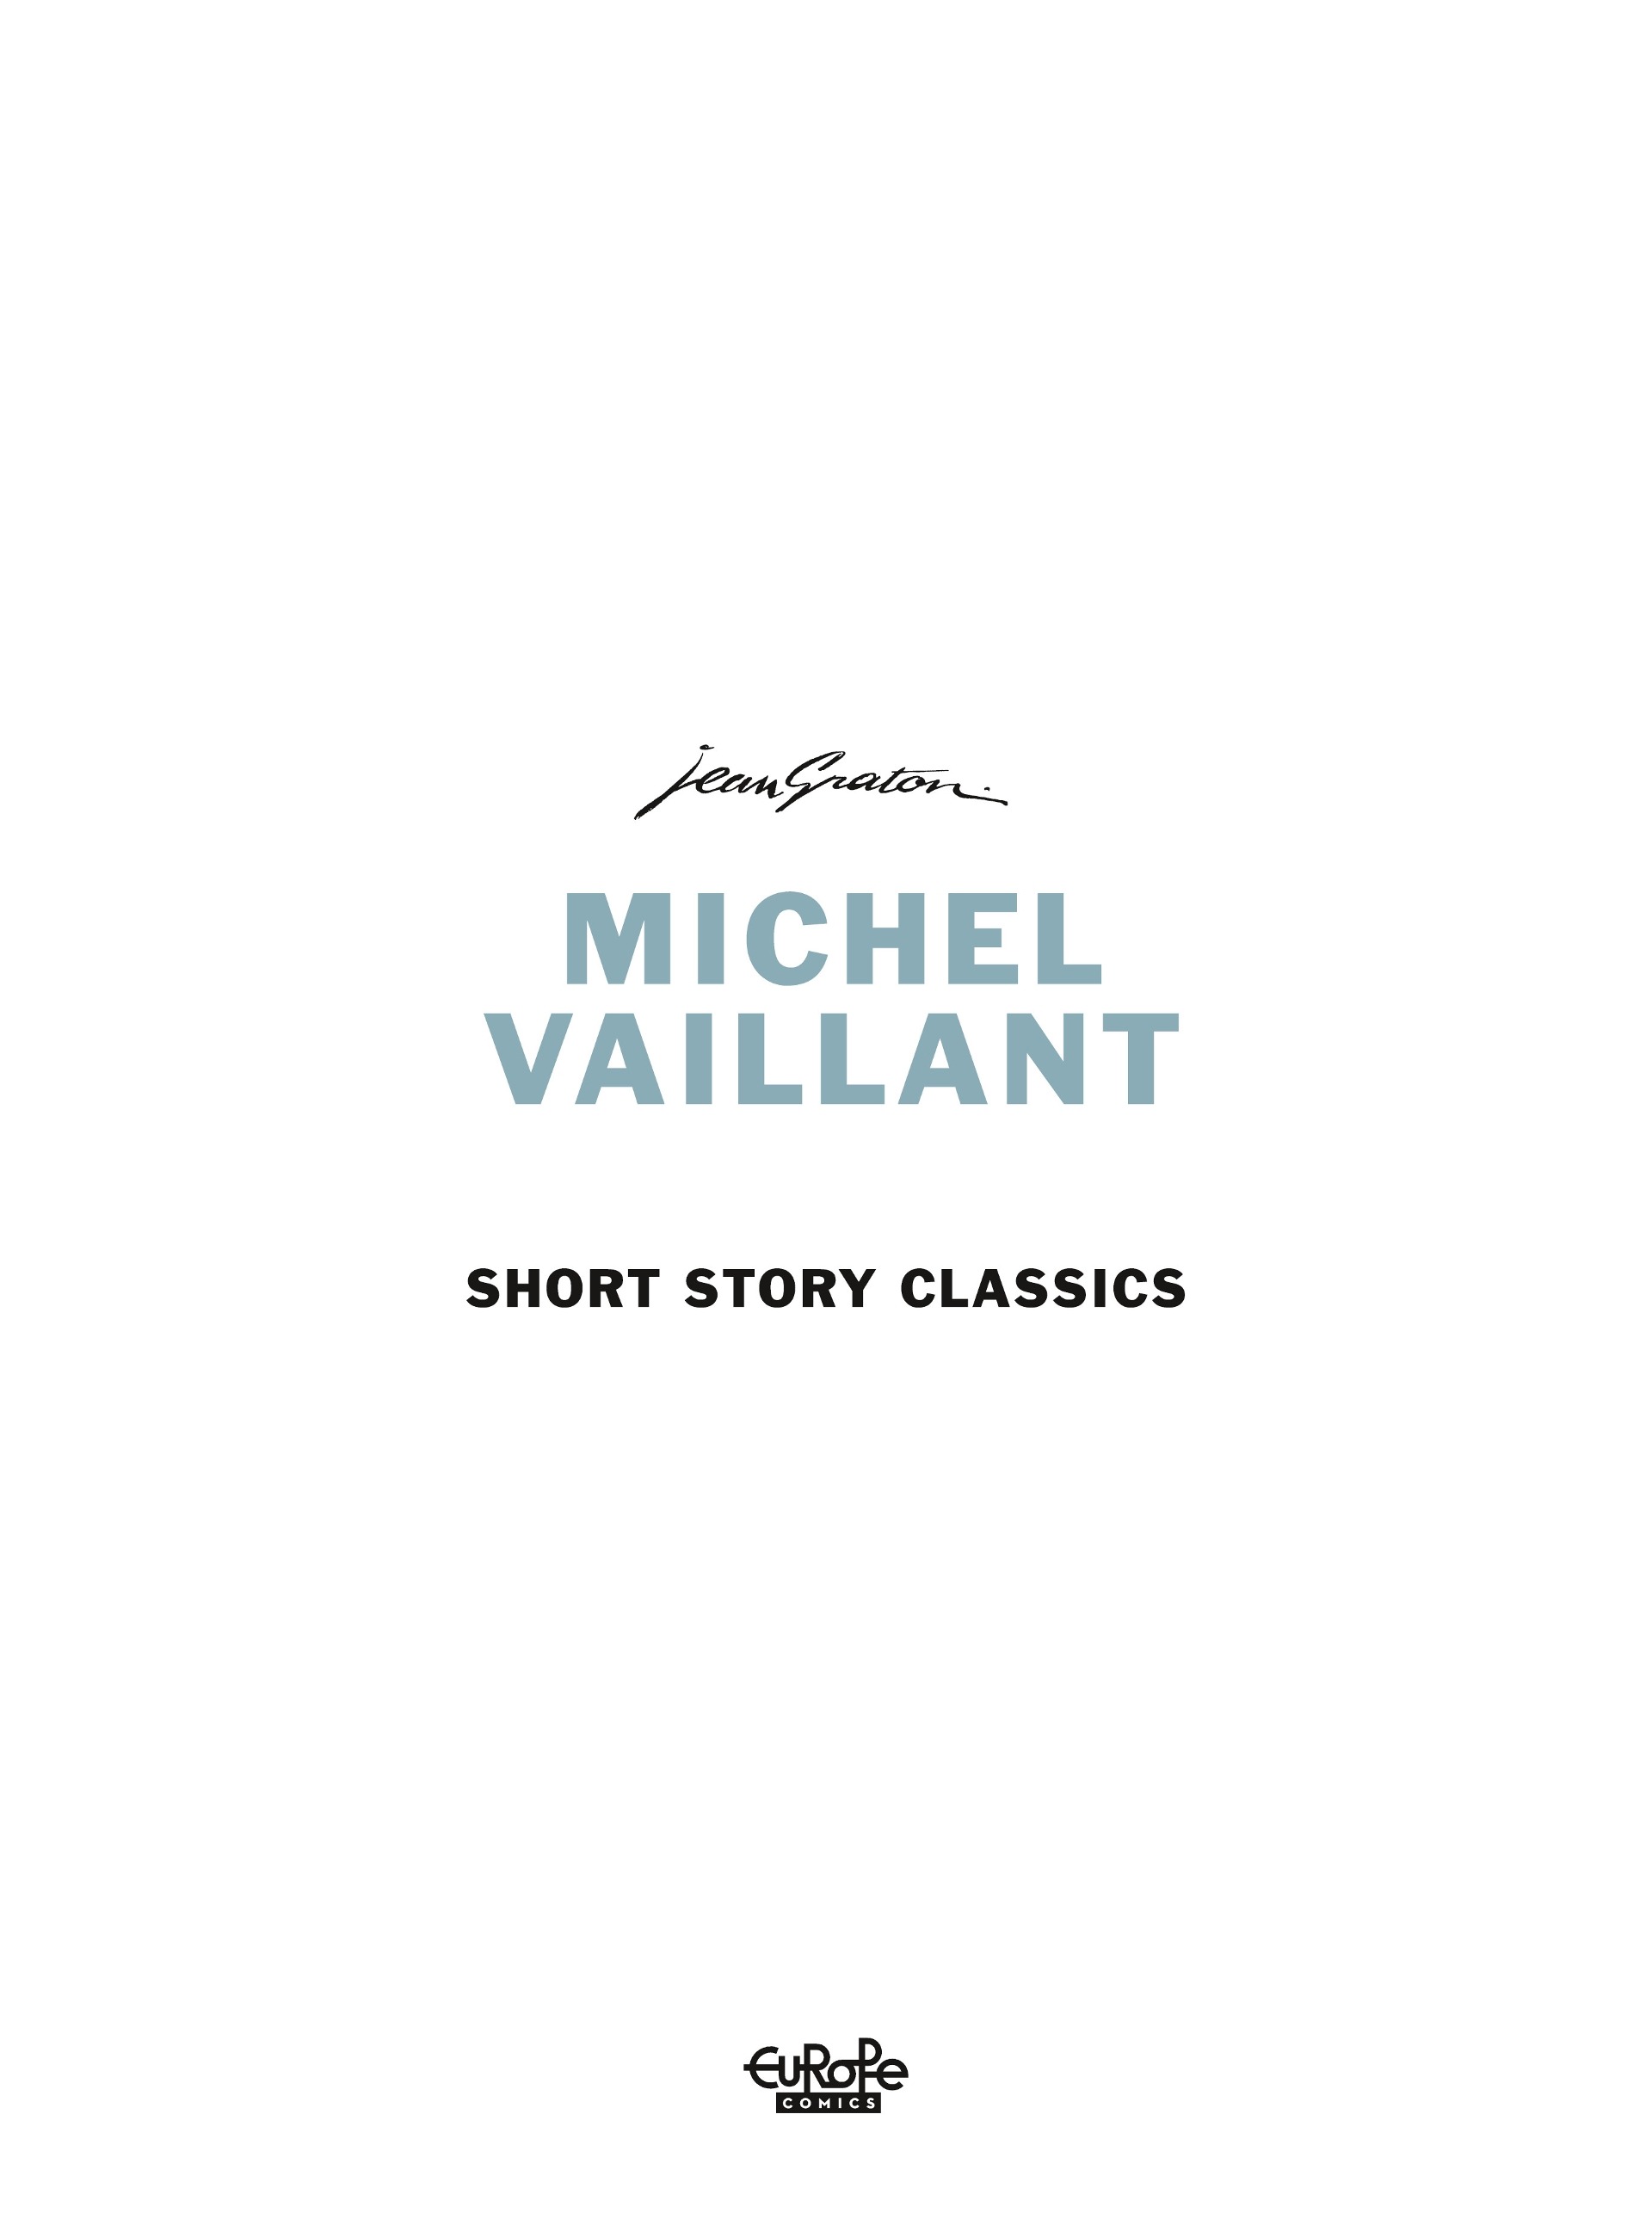 Read online Michel Vaillant Short Story Classics comic -  Issue # Full - 3